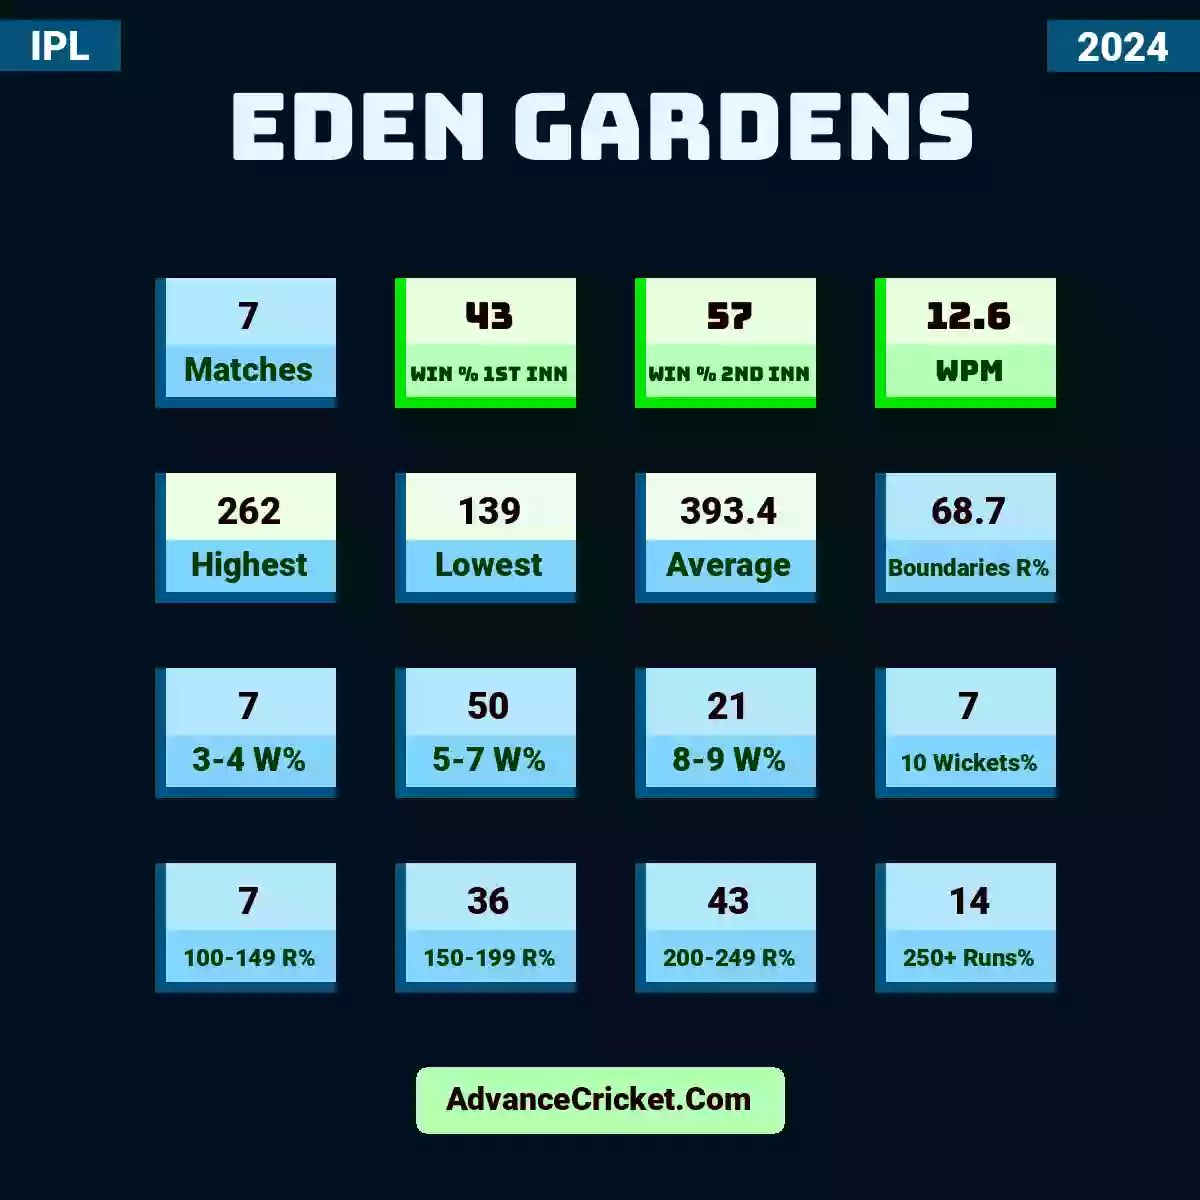 Image showing Eden Gardens IPL 2024 with Matches: 6, Win % 1st Inn: 33, Win % 2nd Inn: 67, WPM: 12.2, Highest: 262, Lowest: 153, Average: 409.7, Boundaries R%: 68.9, 3-4 W%: 8, 5-7 W%: 50, 8-9 W%: 17, 10 Wickets%: 8, 100-149 R%: 0, 150-199 R%: 33, 200-249 R%: 50, 250+ Runs%: 17.